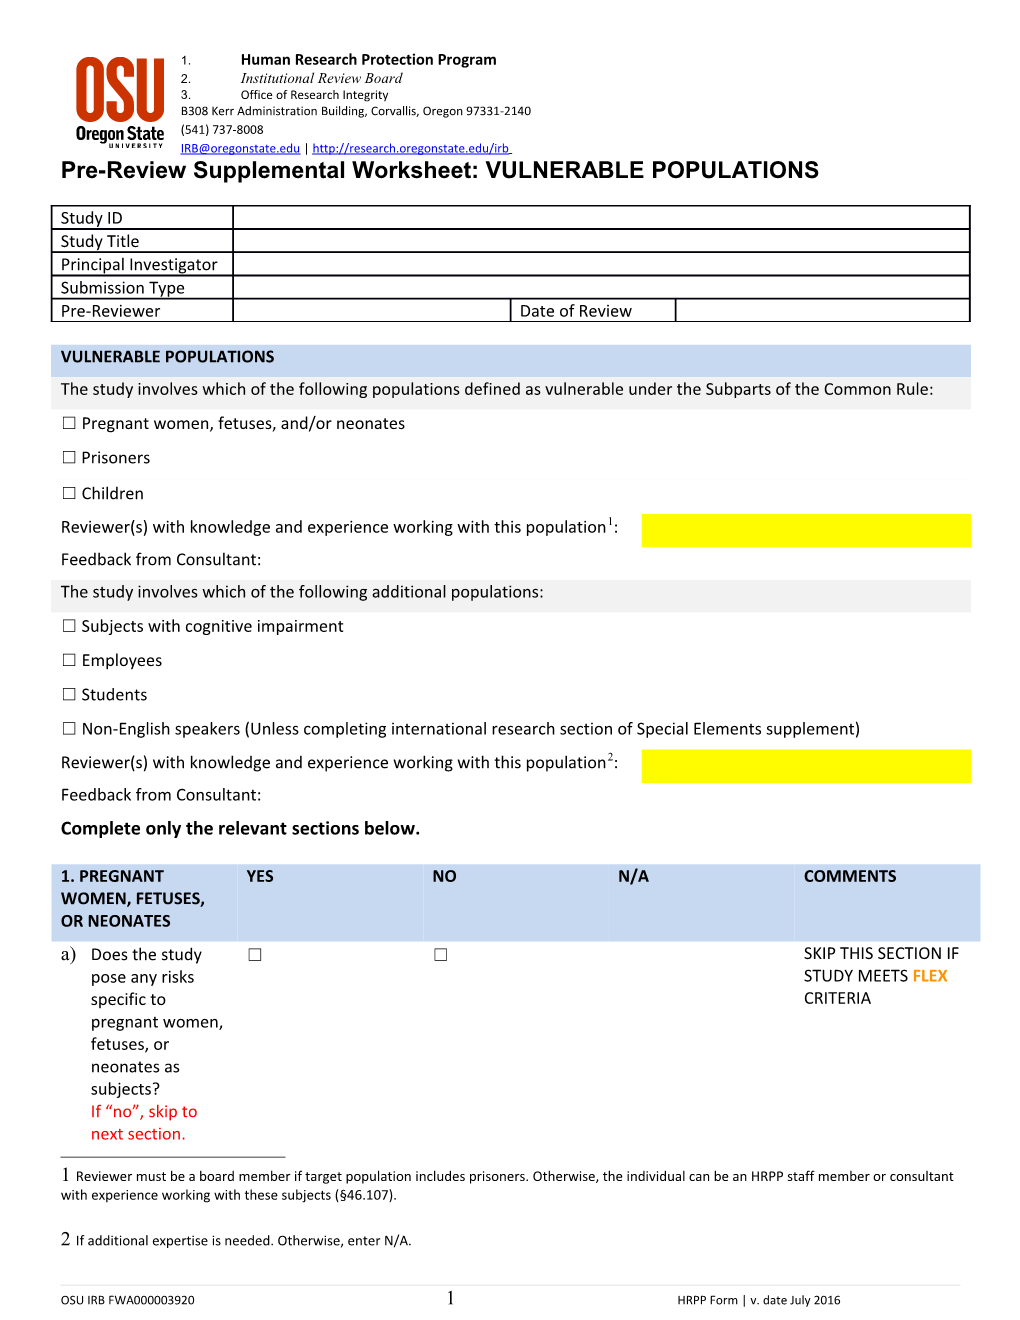 Pre-Review Supplemental Worksheet:VULNERABLE POPULATIONS